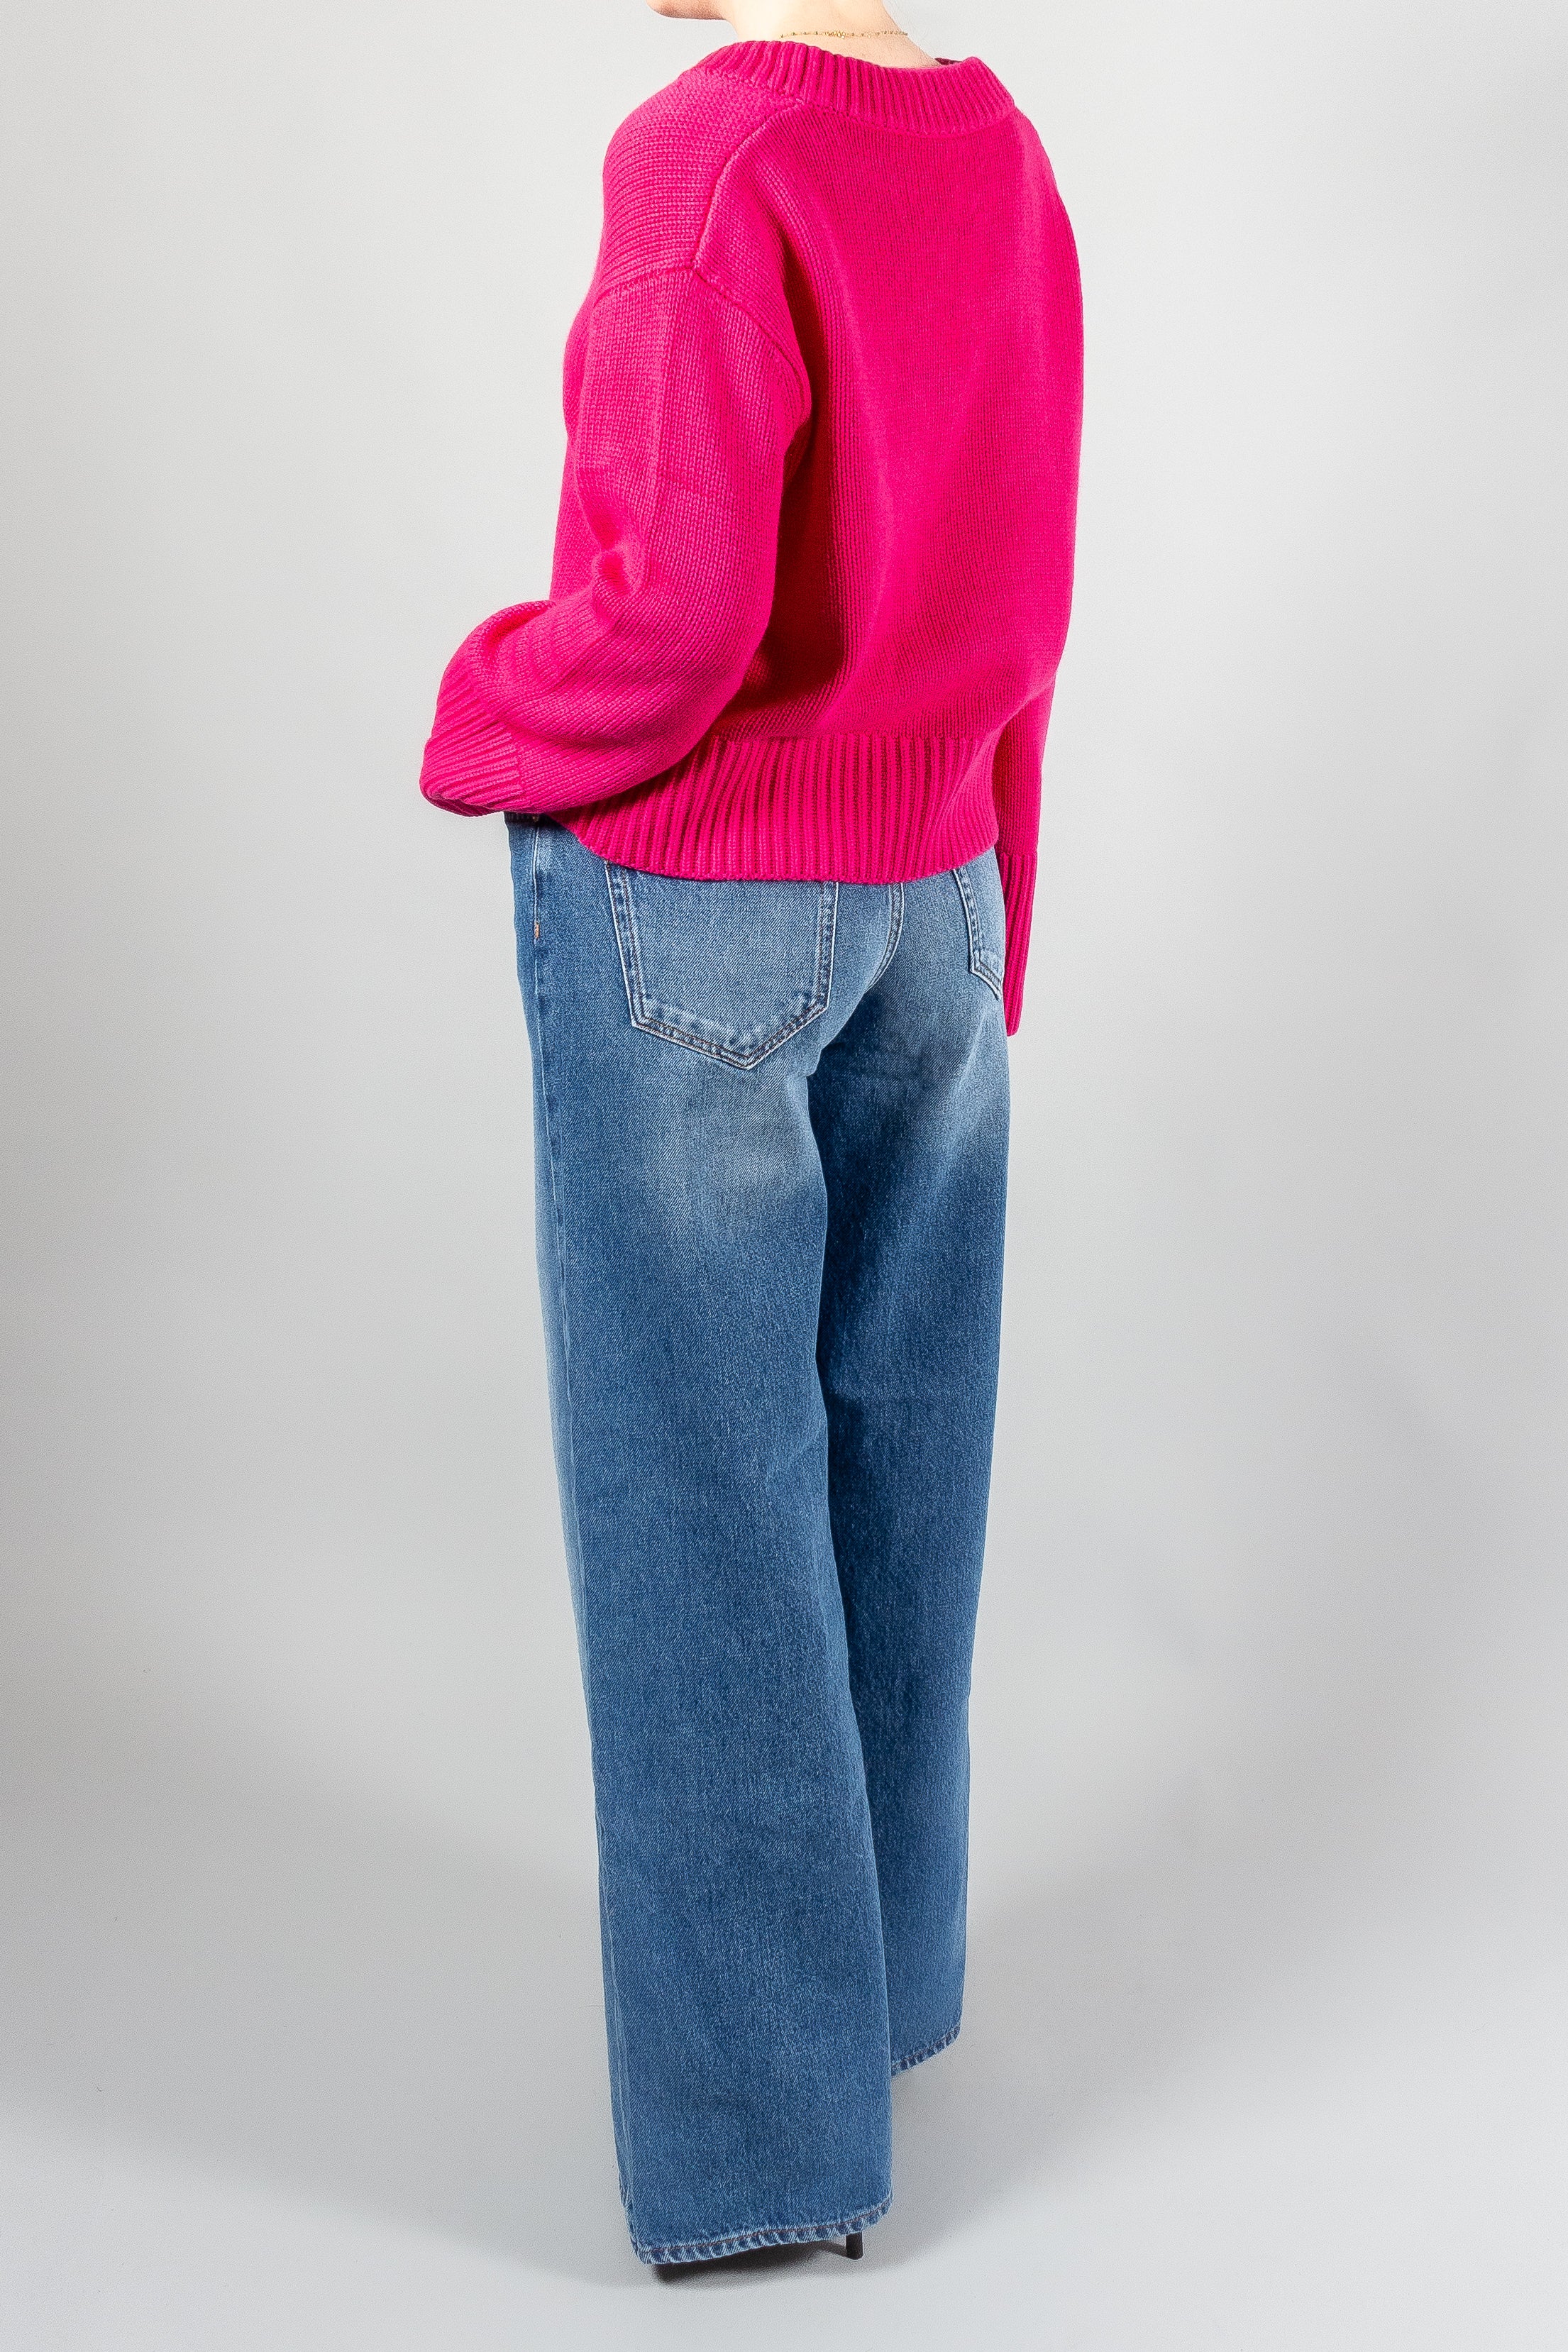 Lisa Yang Aletta Sweater-Knitwear-Misch-Boutique-Vancouver-Canada-misch.ca